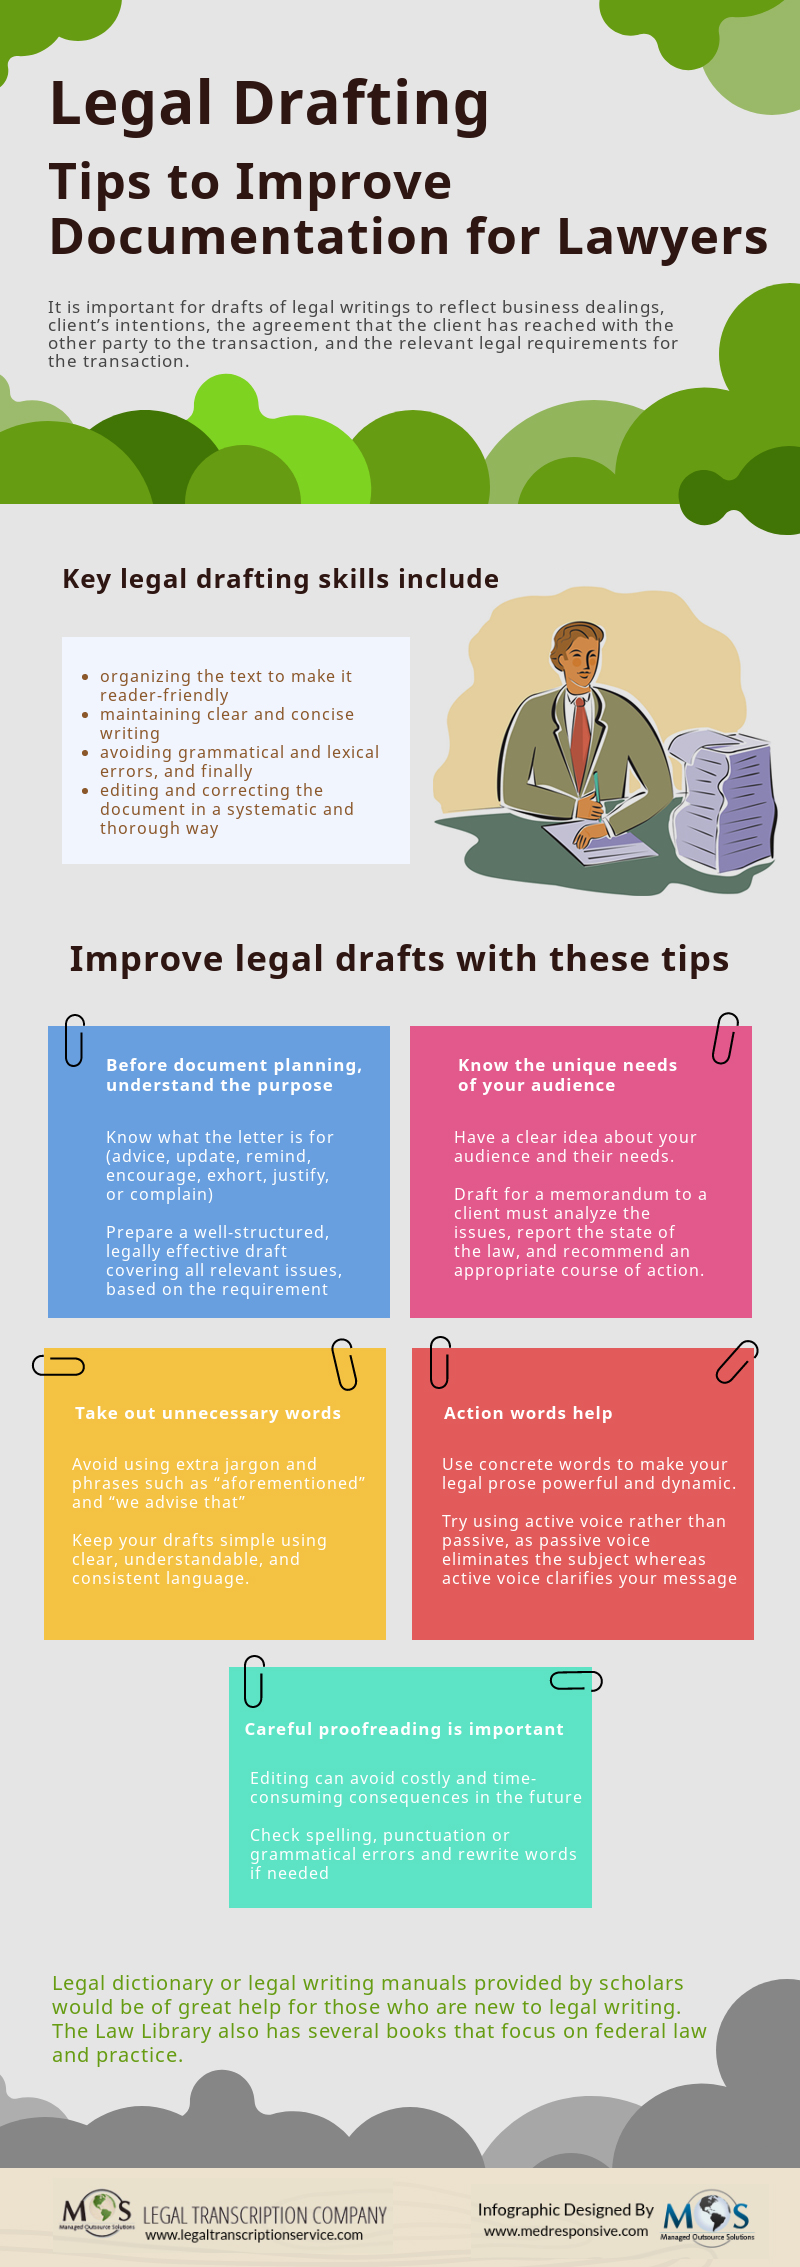 Legal Drafting Tips